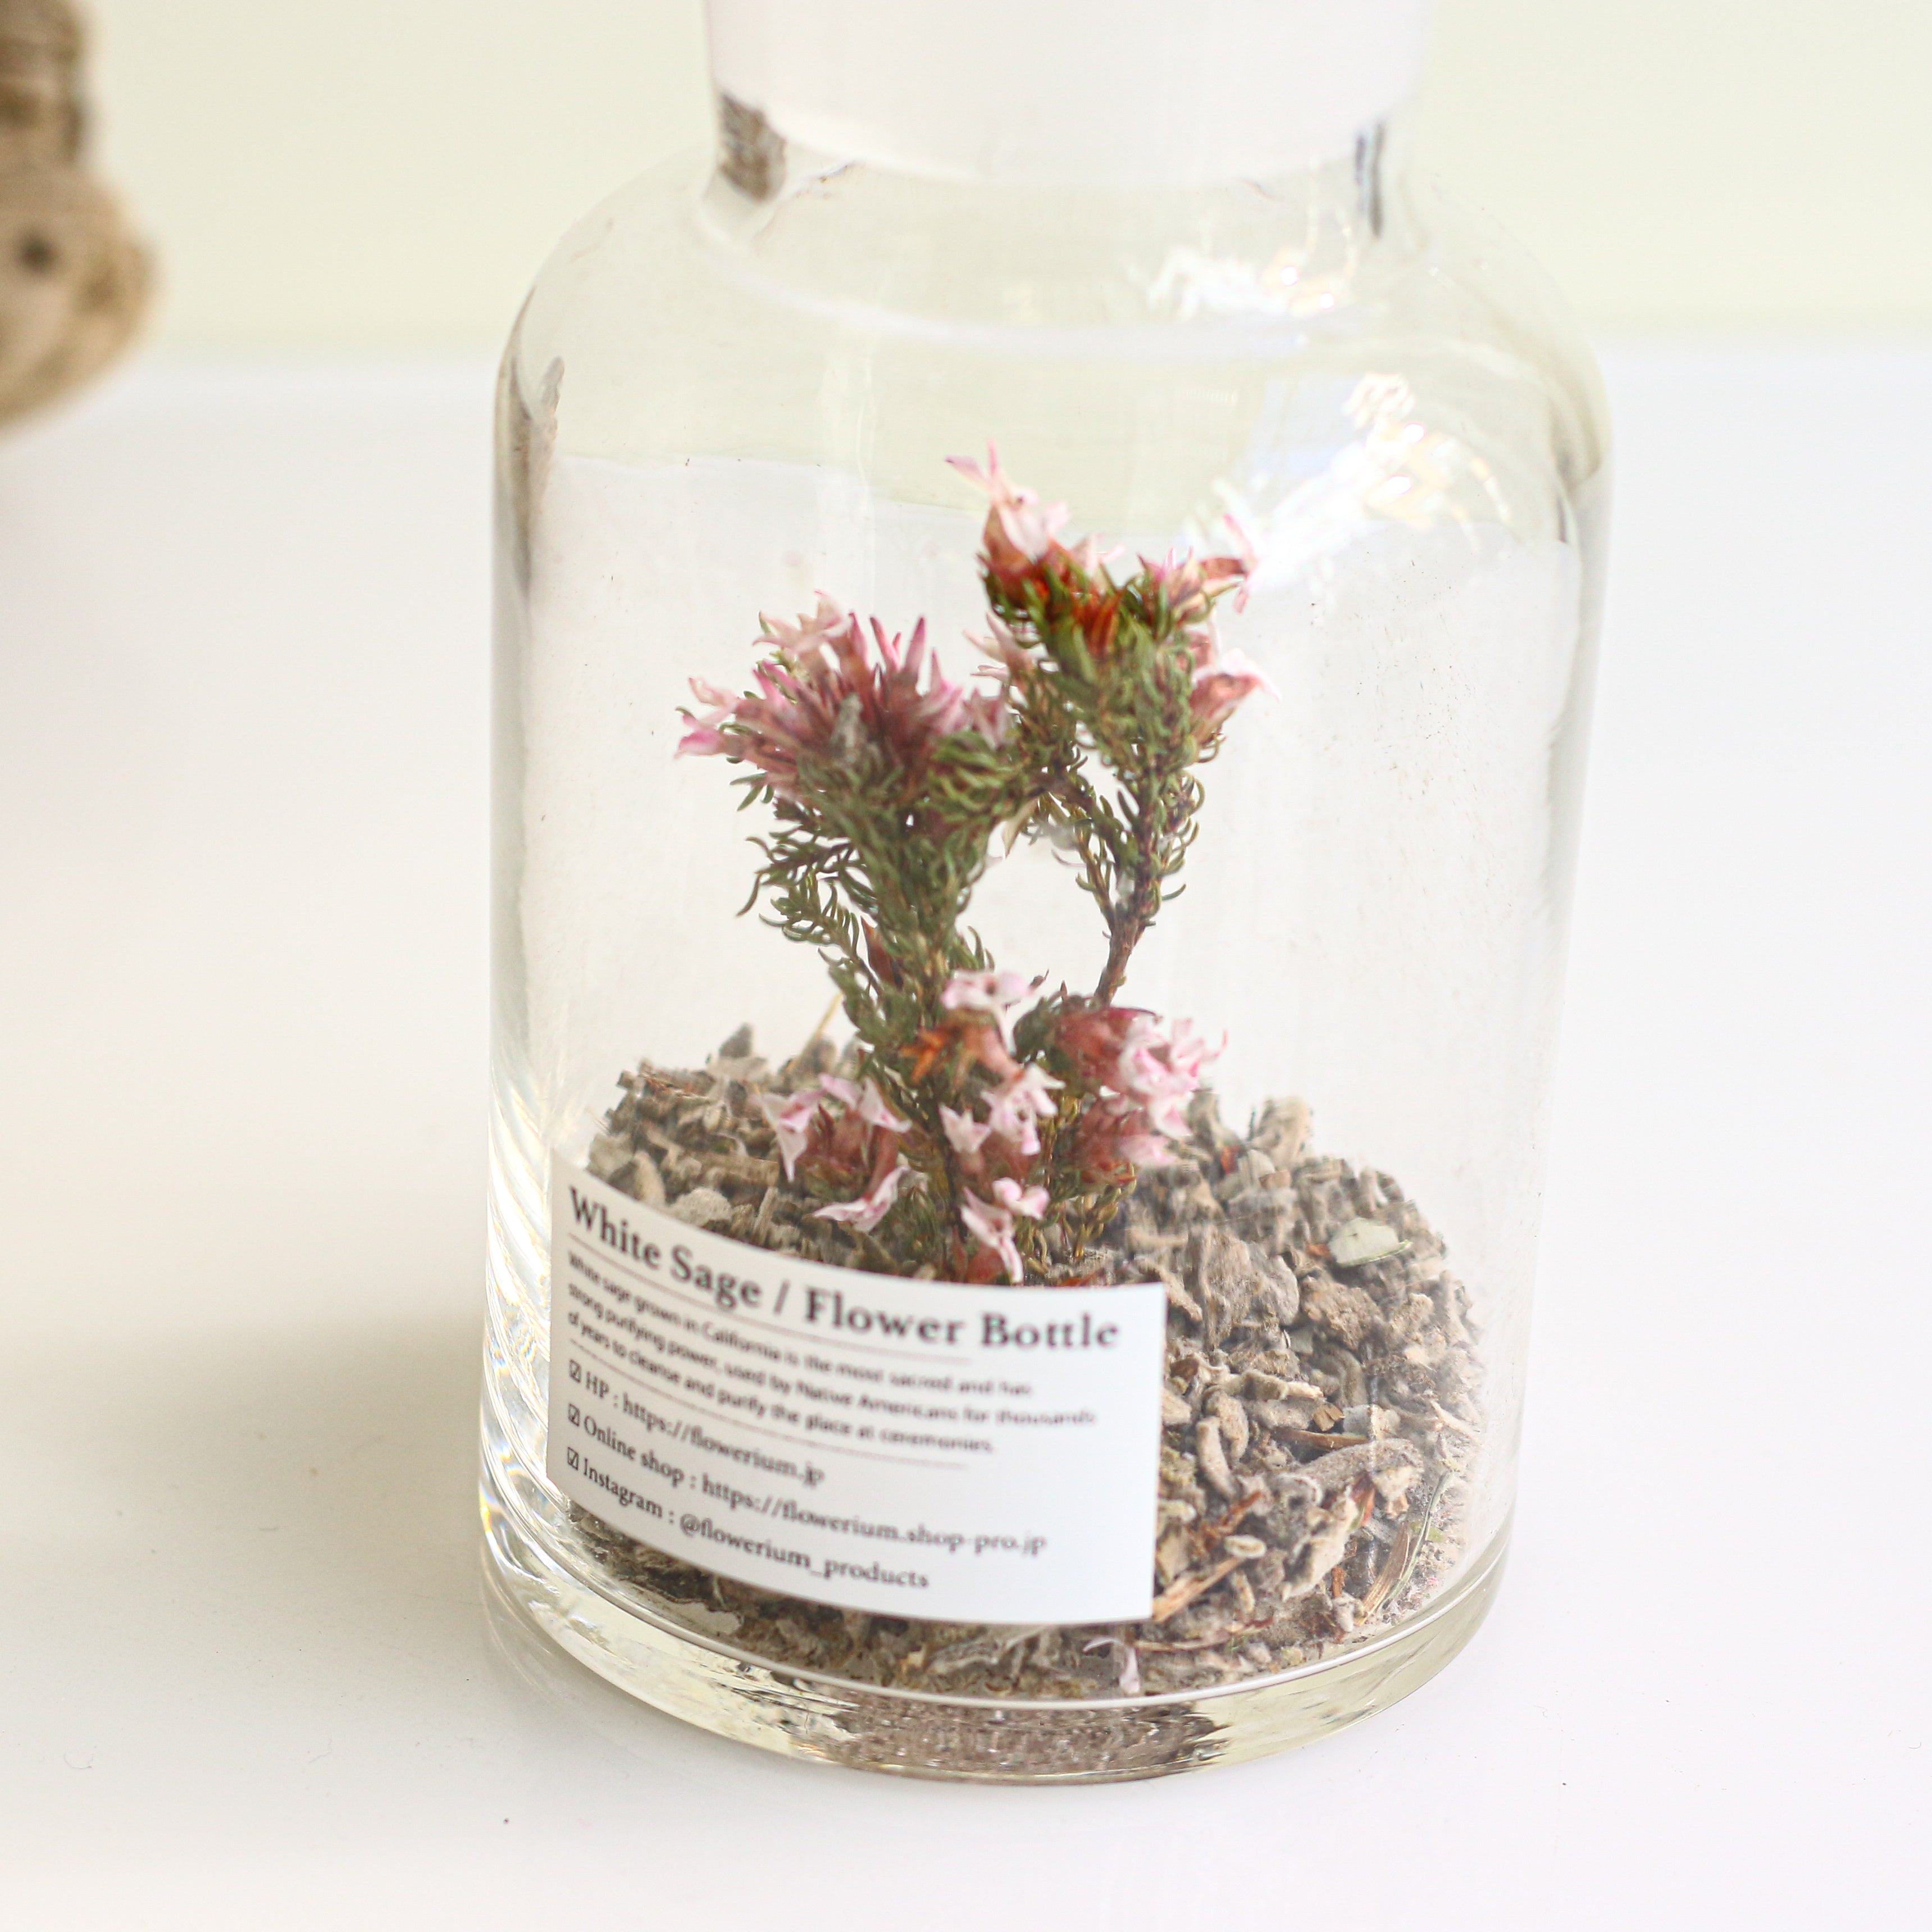 Deep Cleanse White Sage Flower Bottle